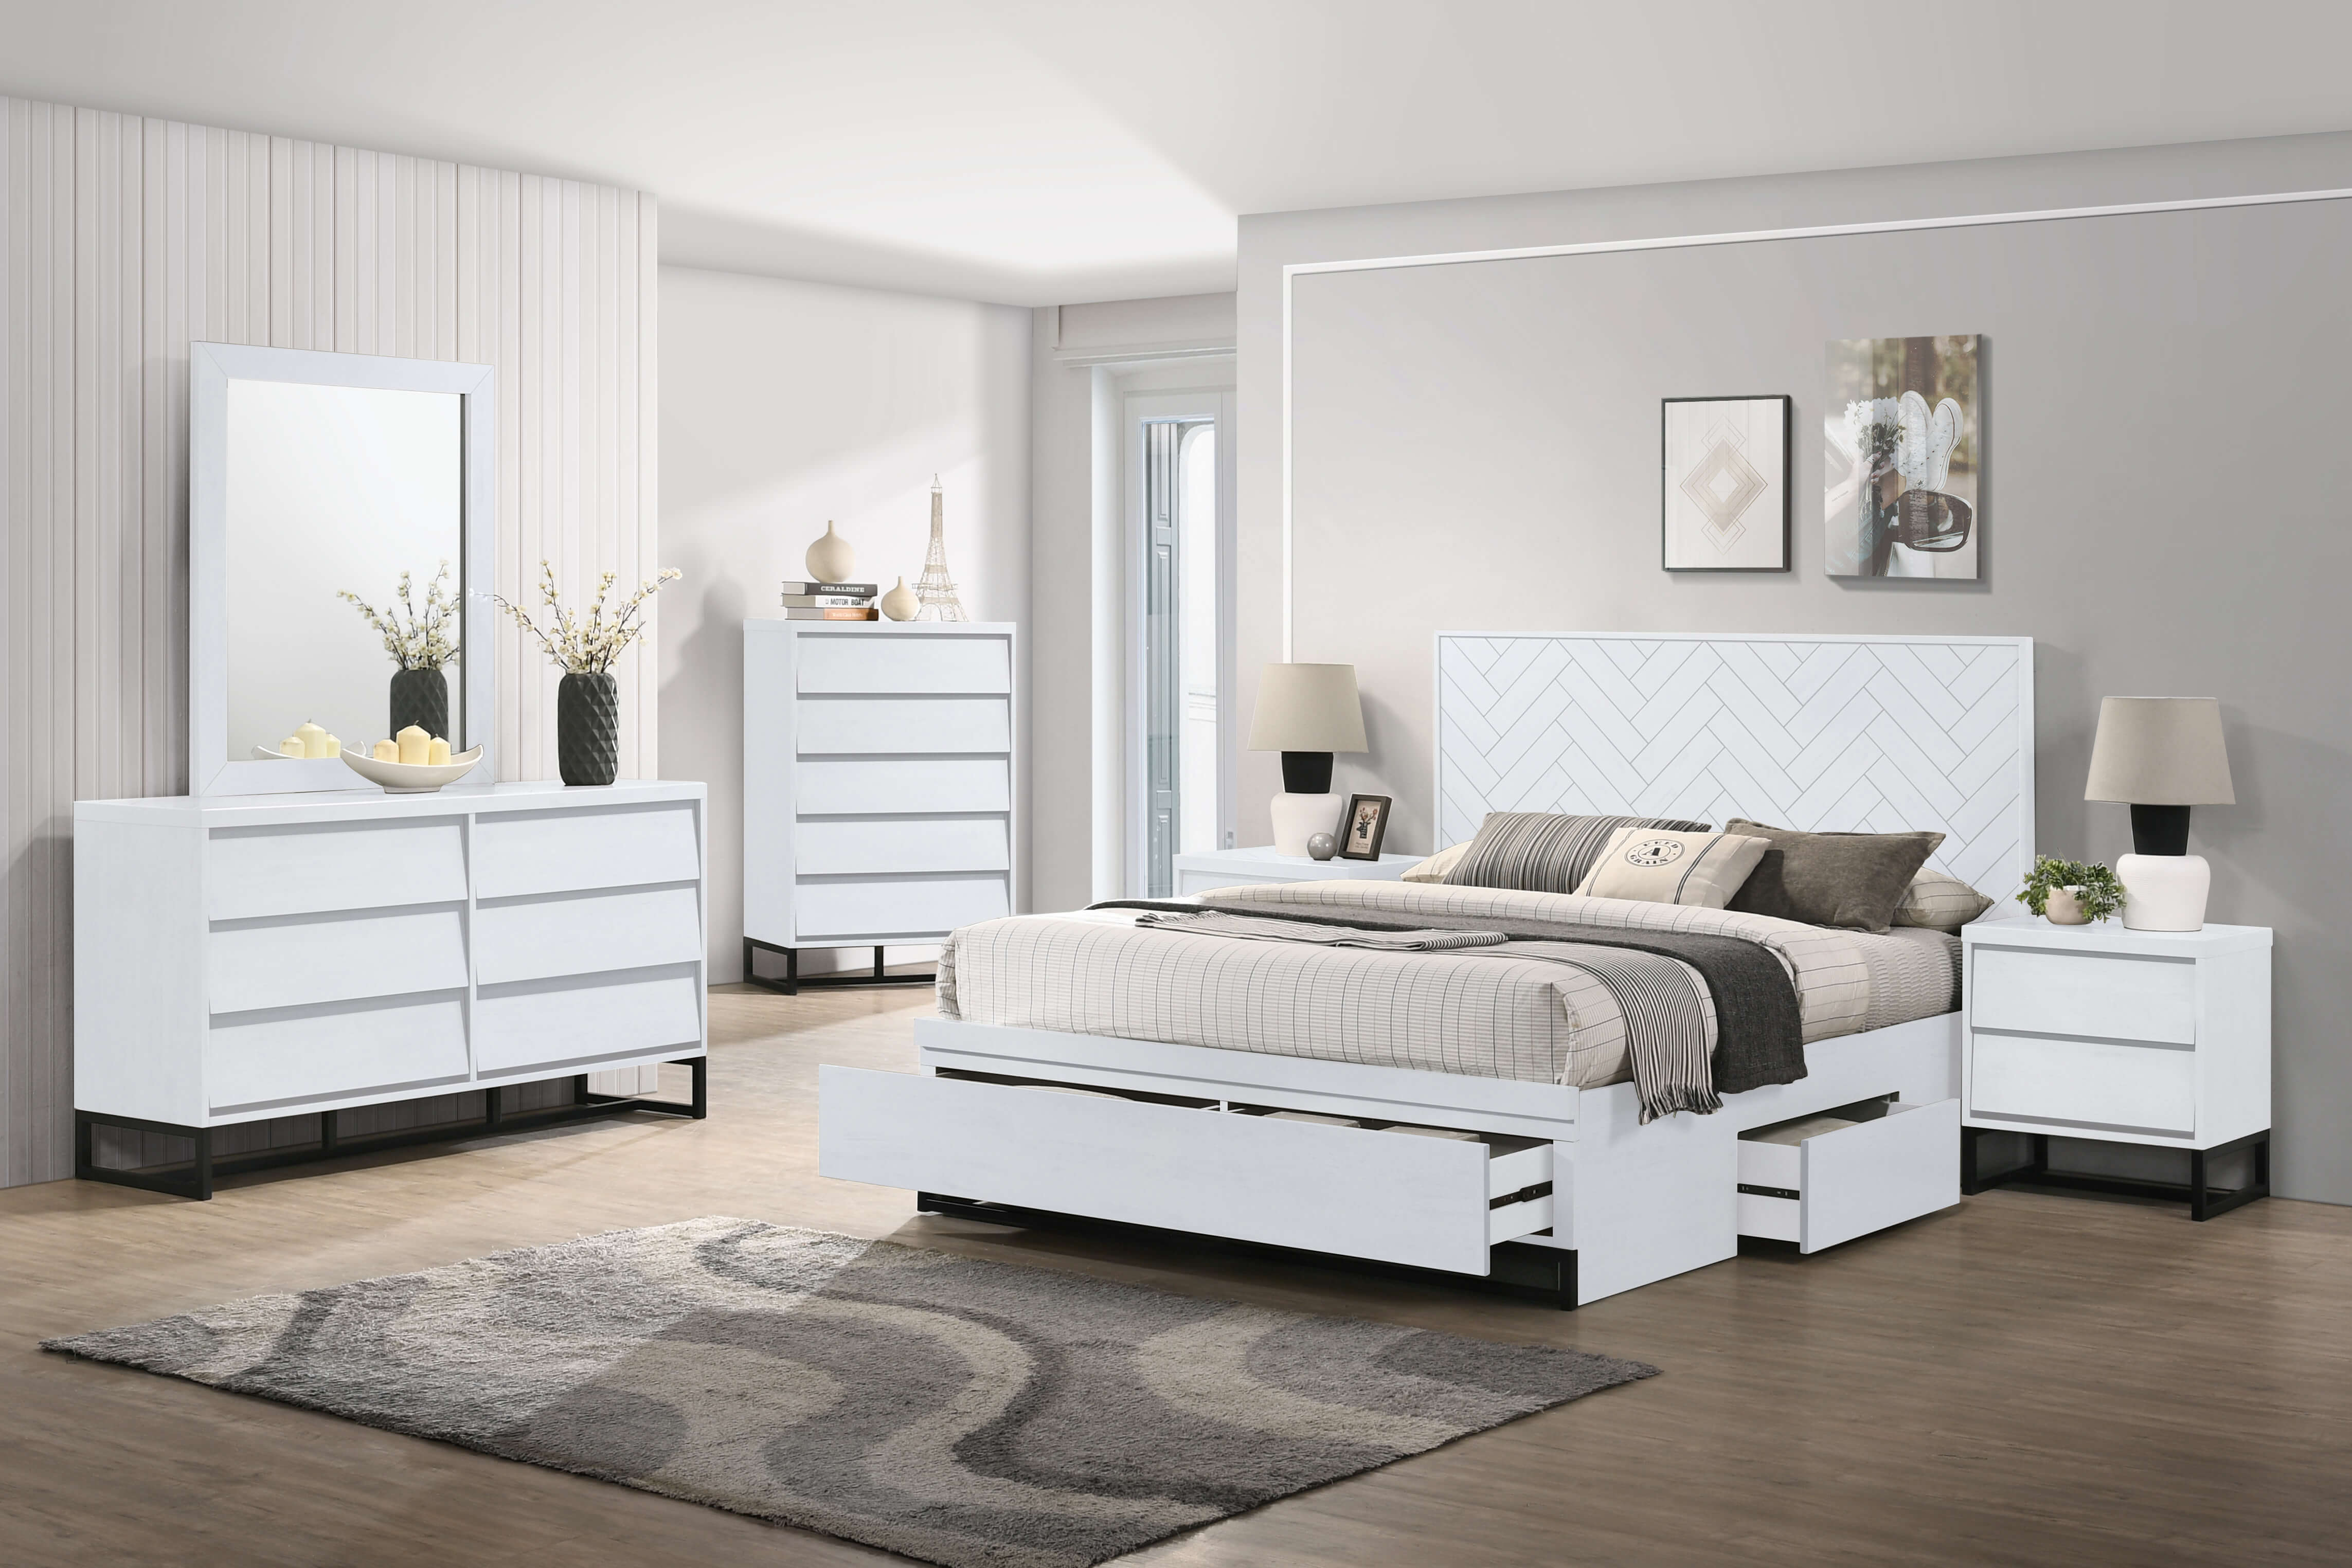 Bodega Bedroom Suite: Versatile Collection in White